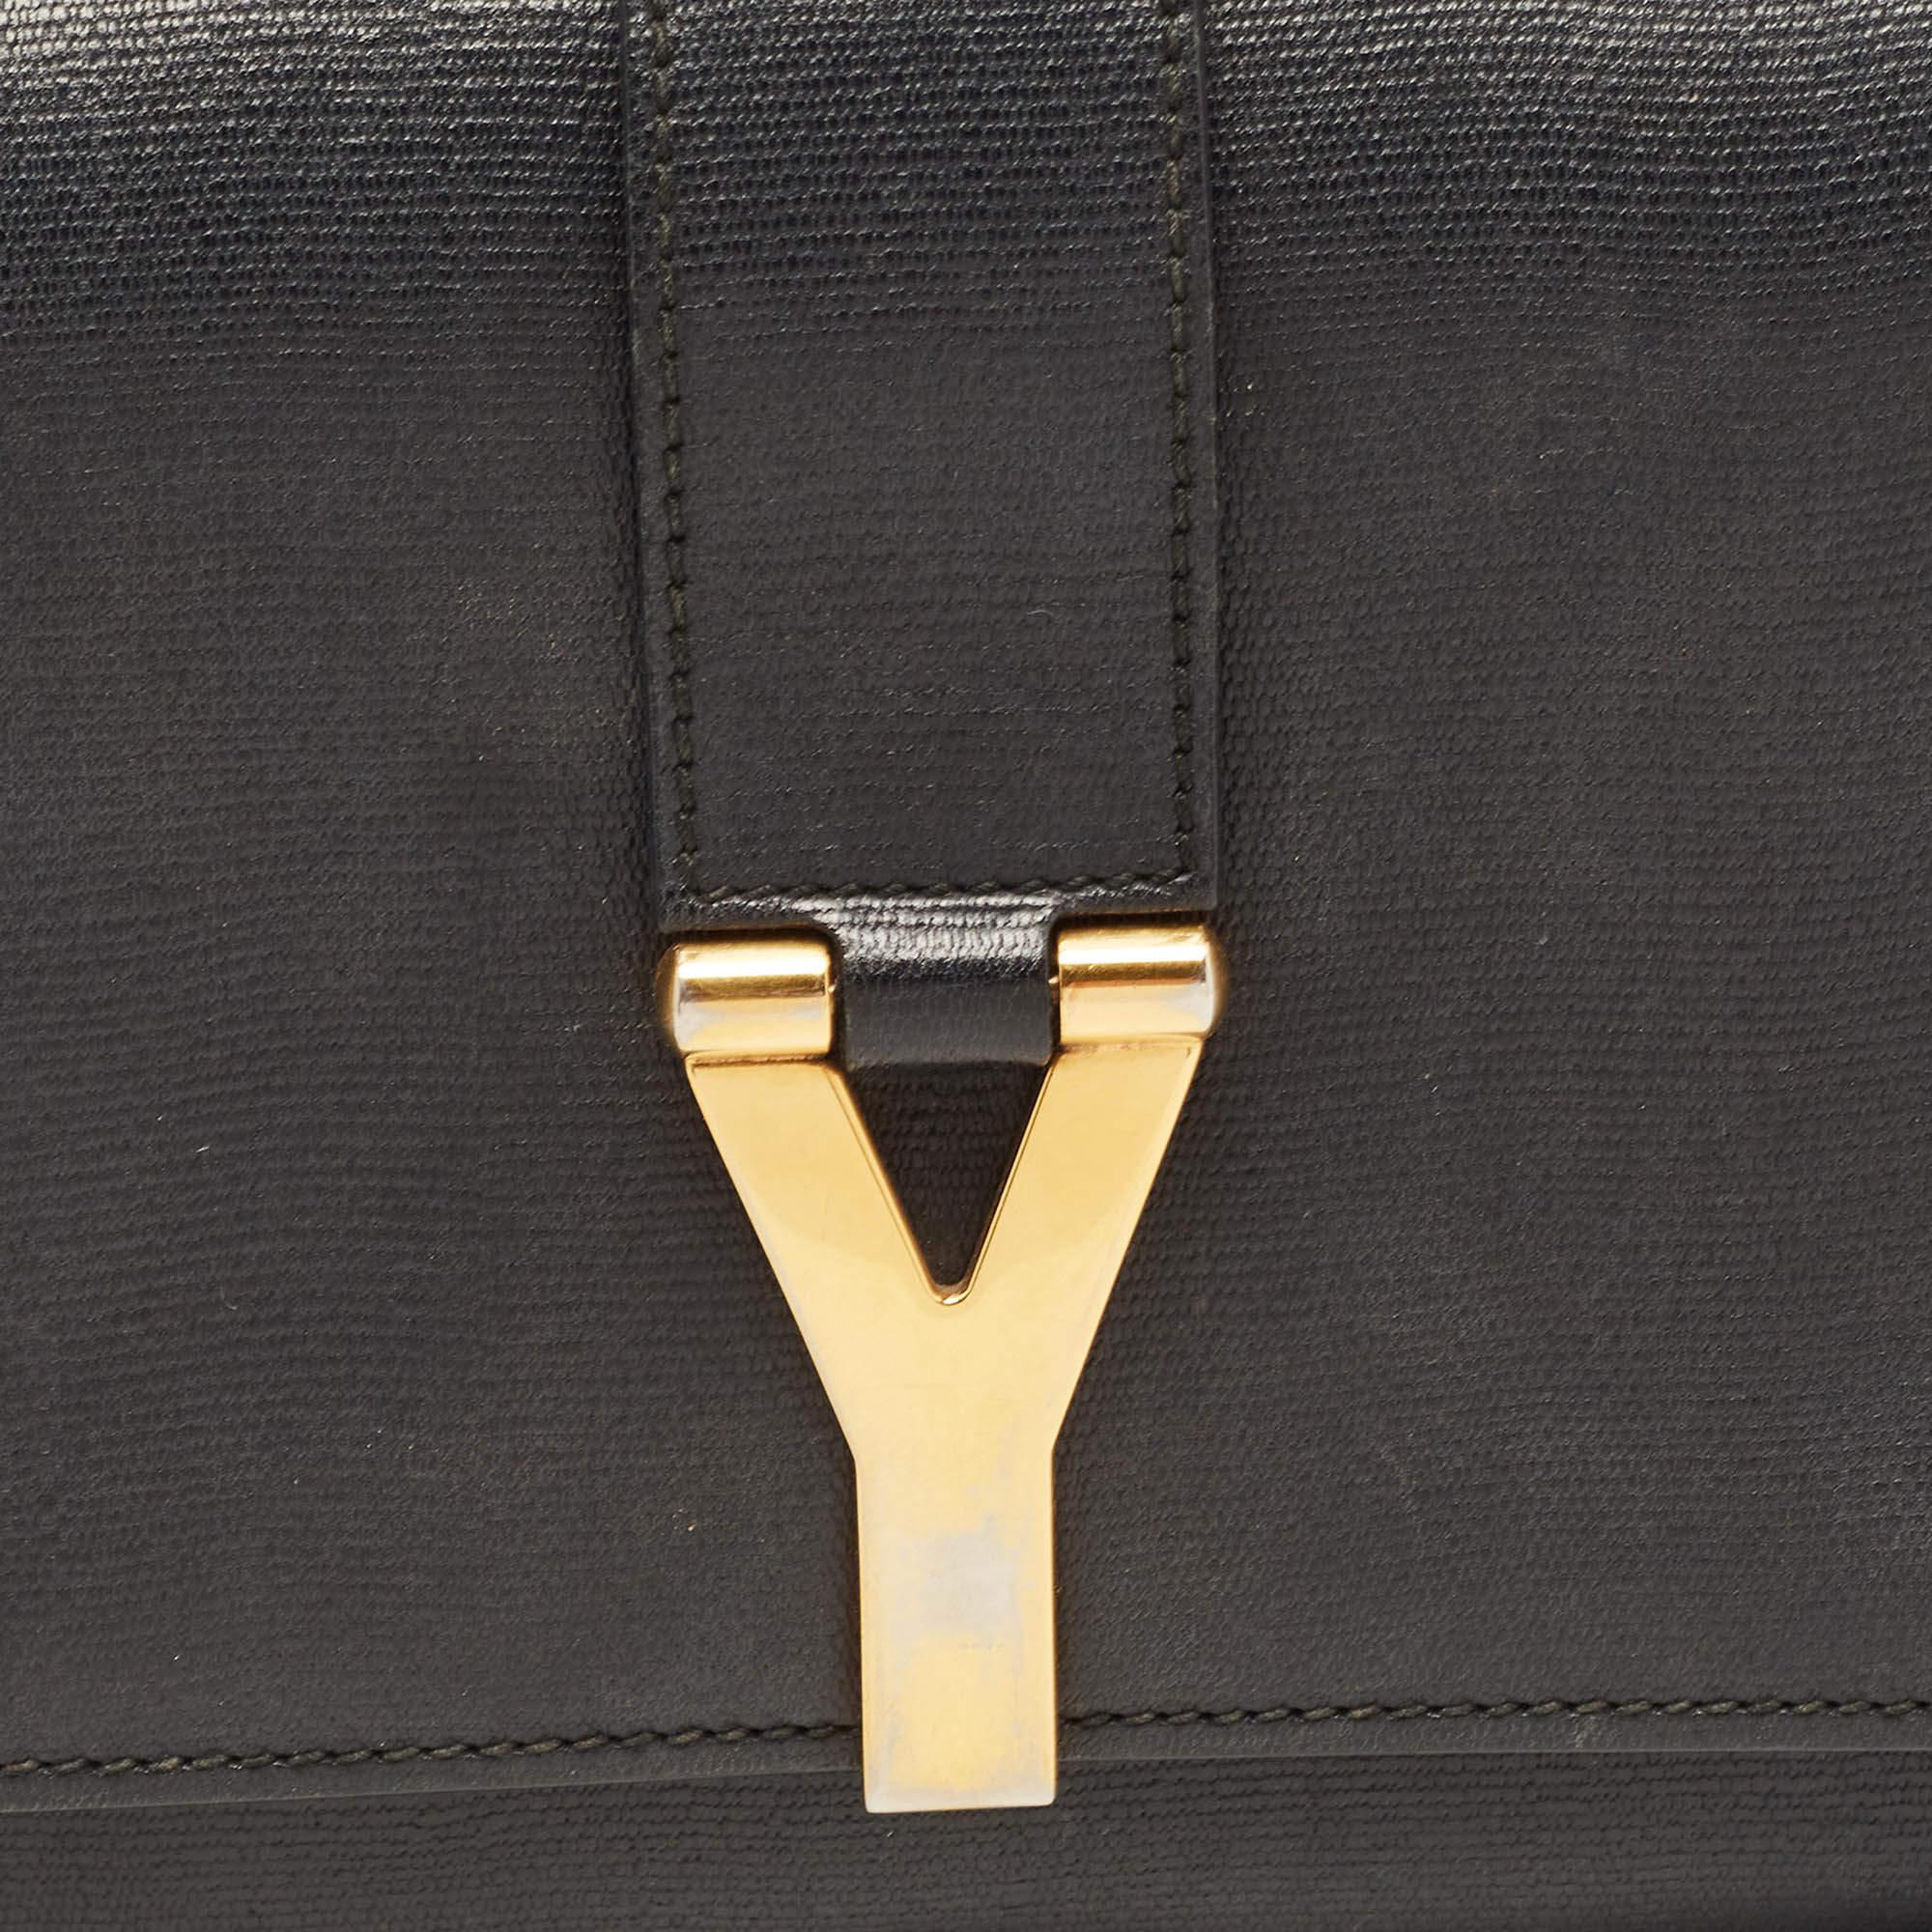 Yves Saint Laurent Black Leather Large Chyc Flap Shoulder Bag 9